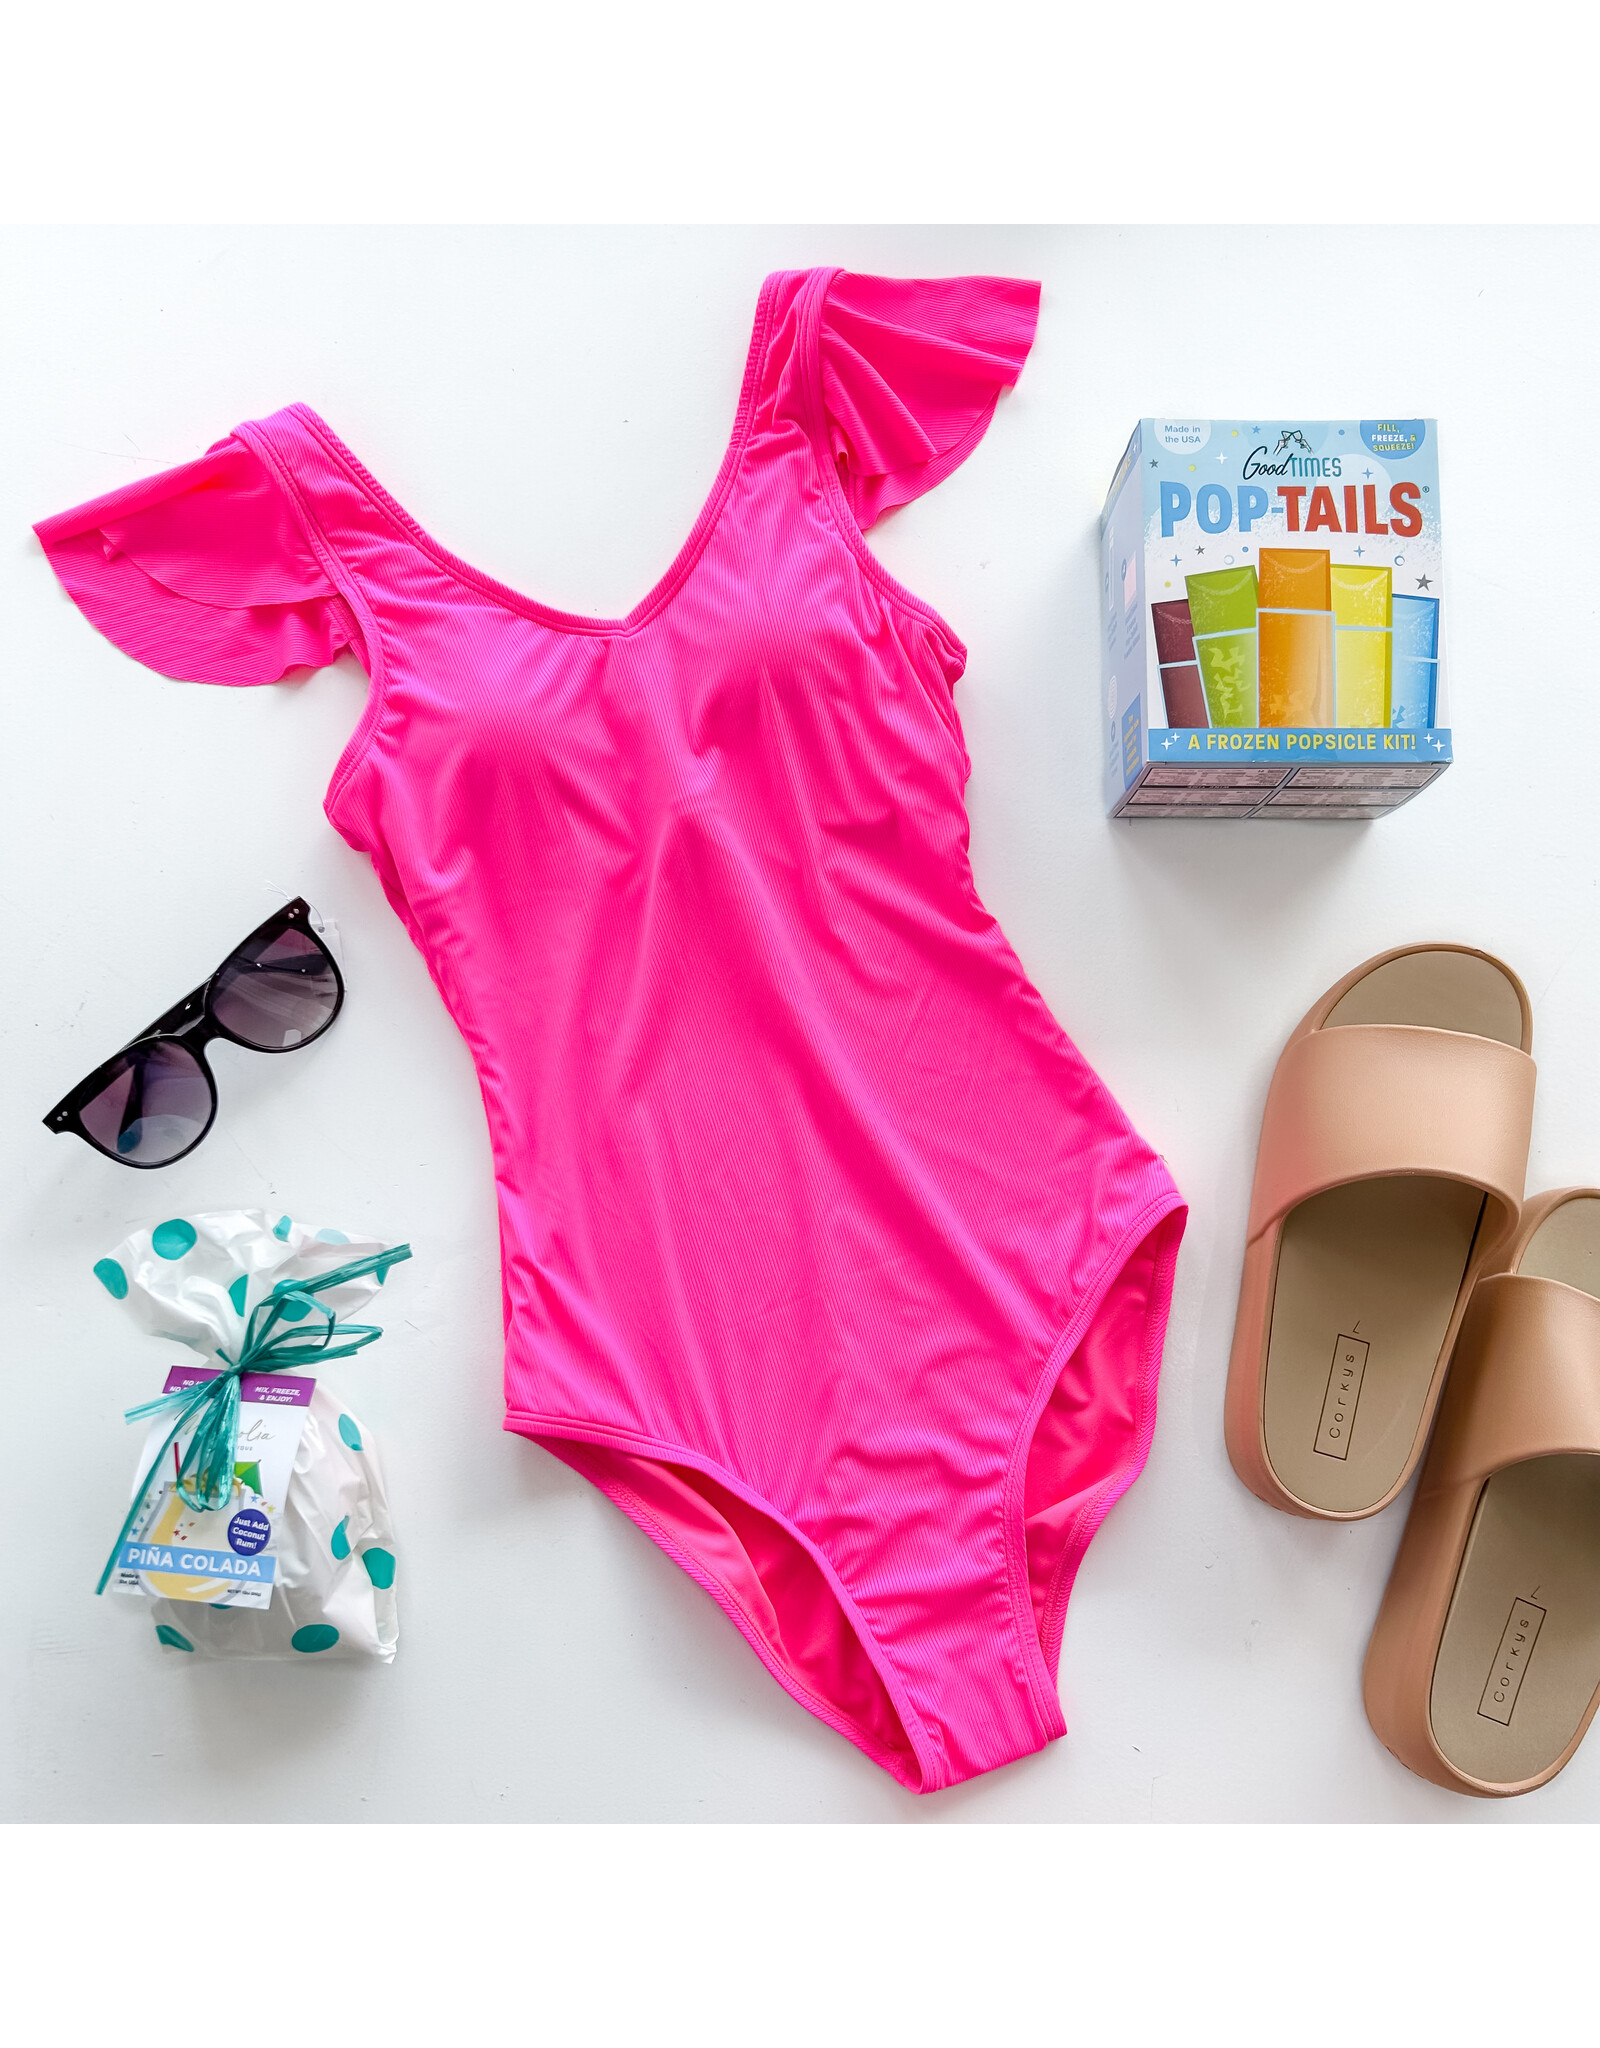 Neon Pink Beachside Bliss Swimsuit